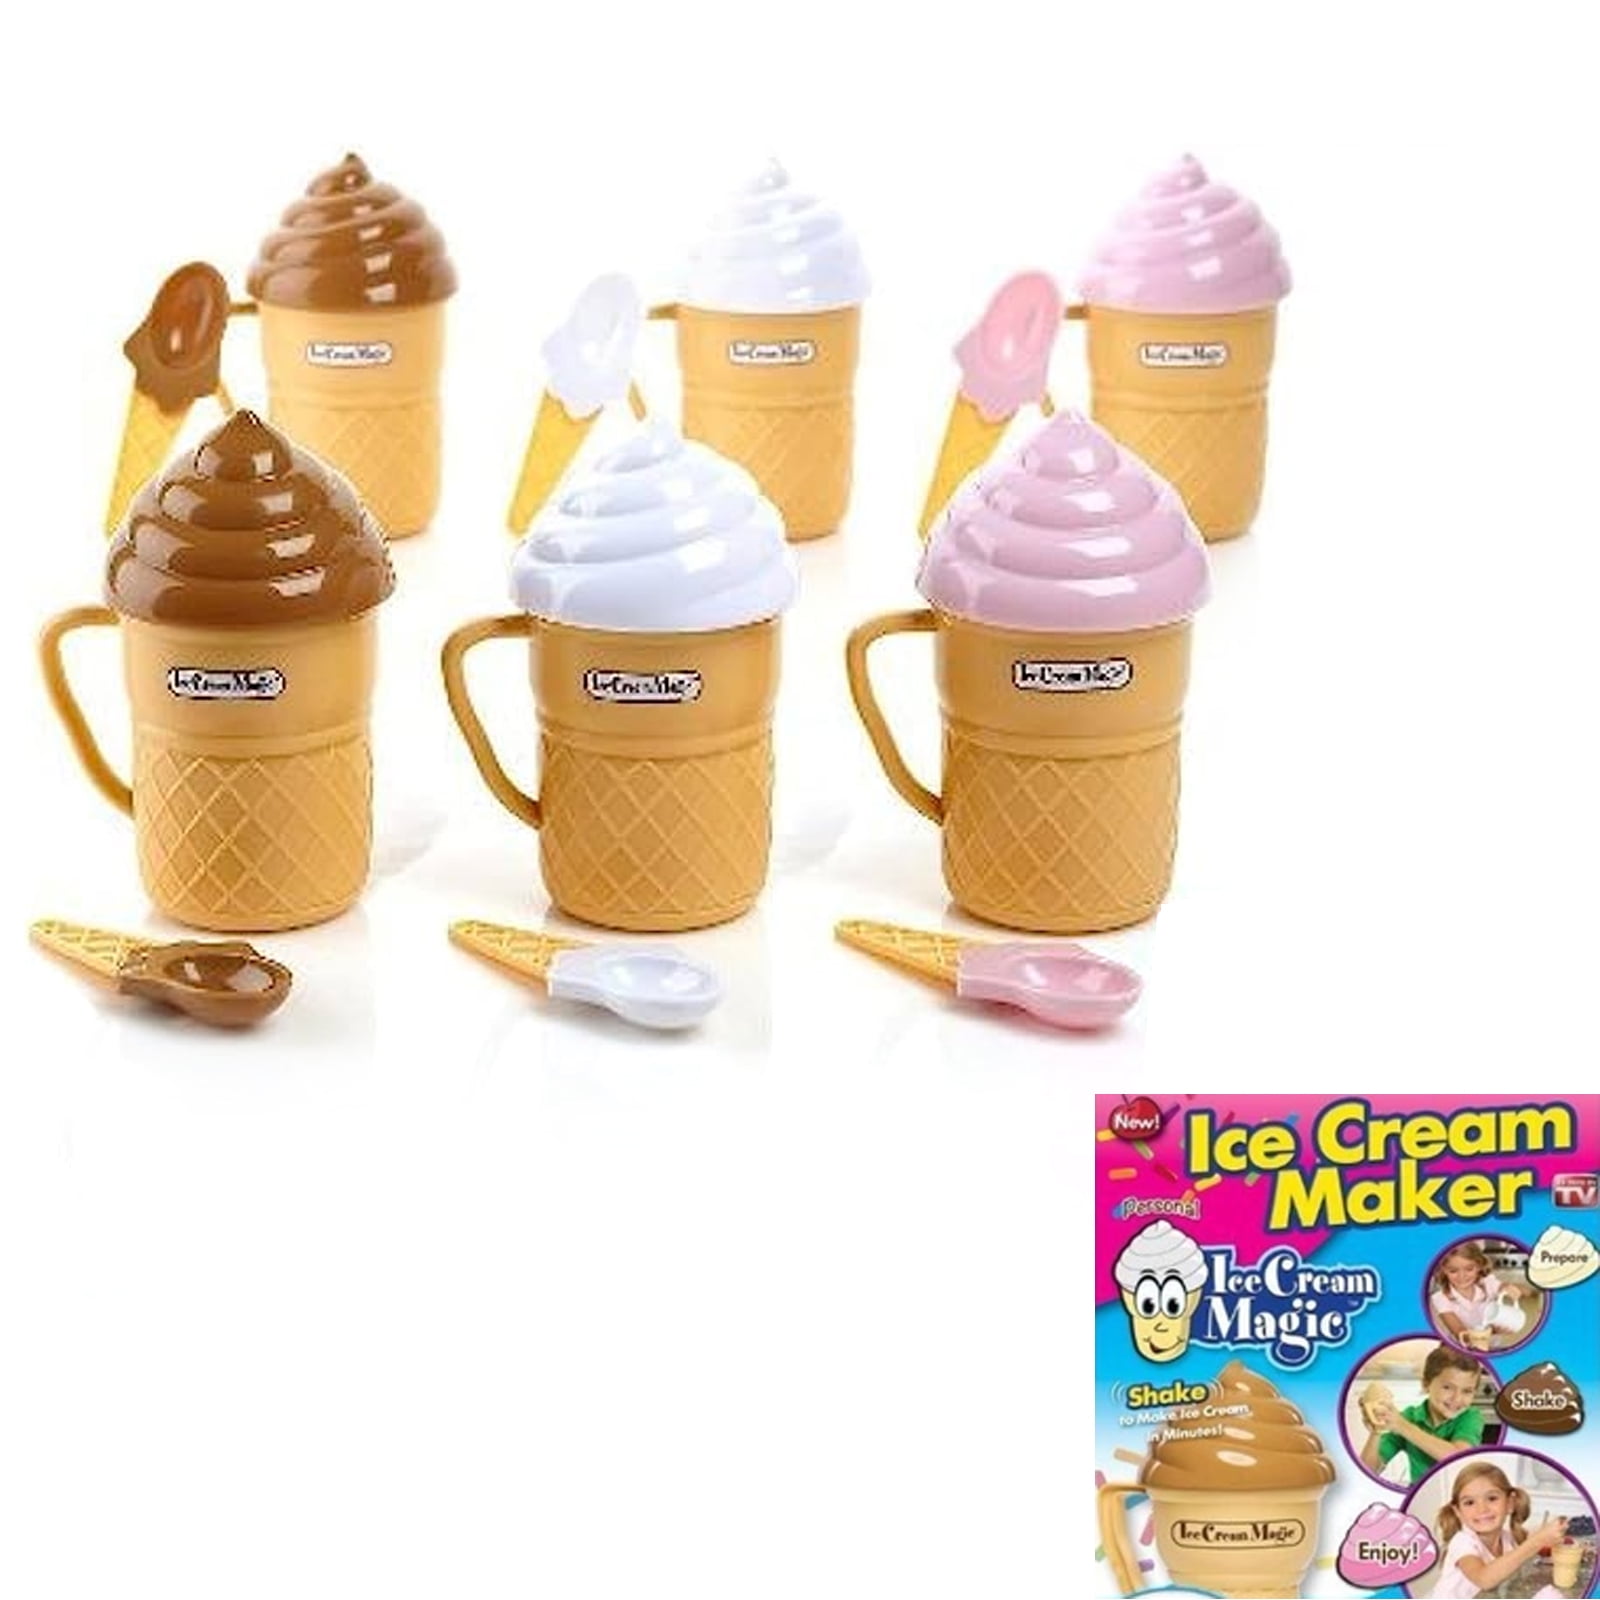 Personal Ice Cream Maker Shake It Make It Ice Cream Magic As Seen